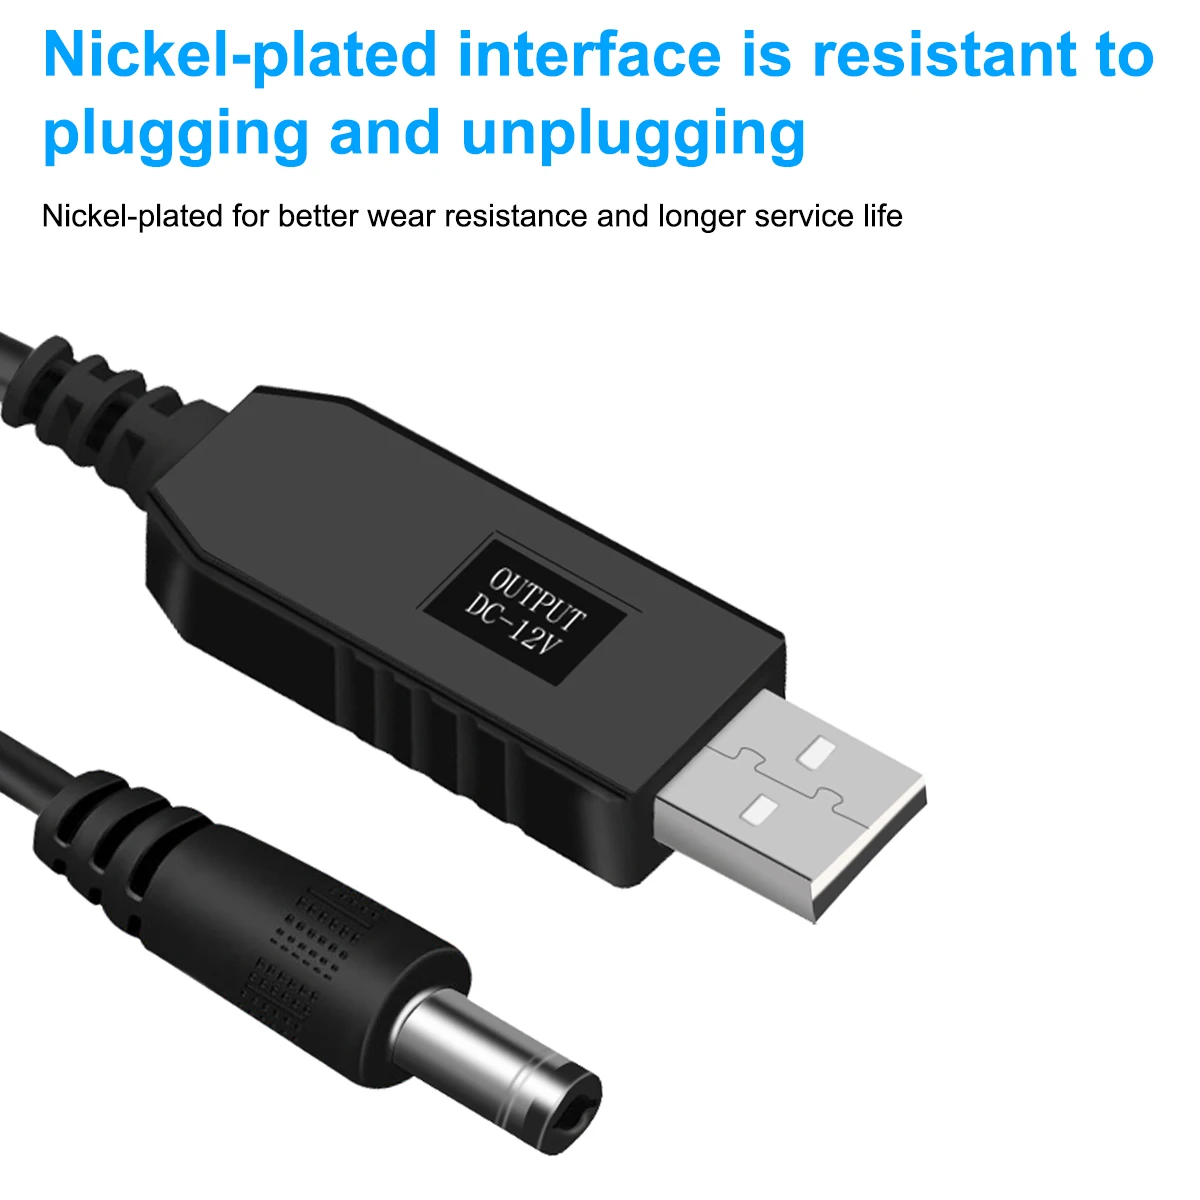 Fonken-conector de Cable WiFi a Powerbank, convertidor de refuerzo de Cable USB de 5V a 12V de CC, Cable de aumento para enrutador Wifi, módem, ventilador y altavoz